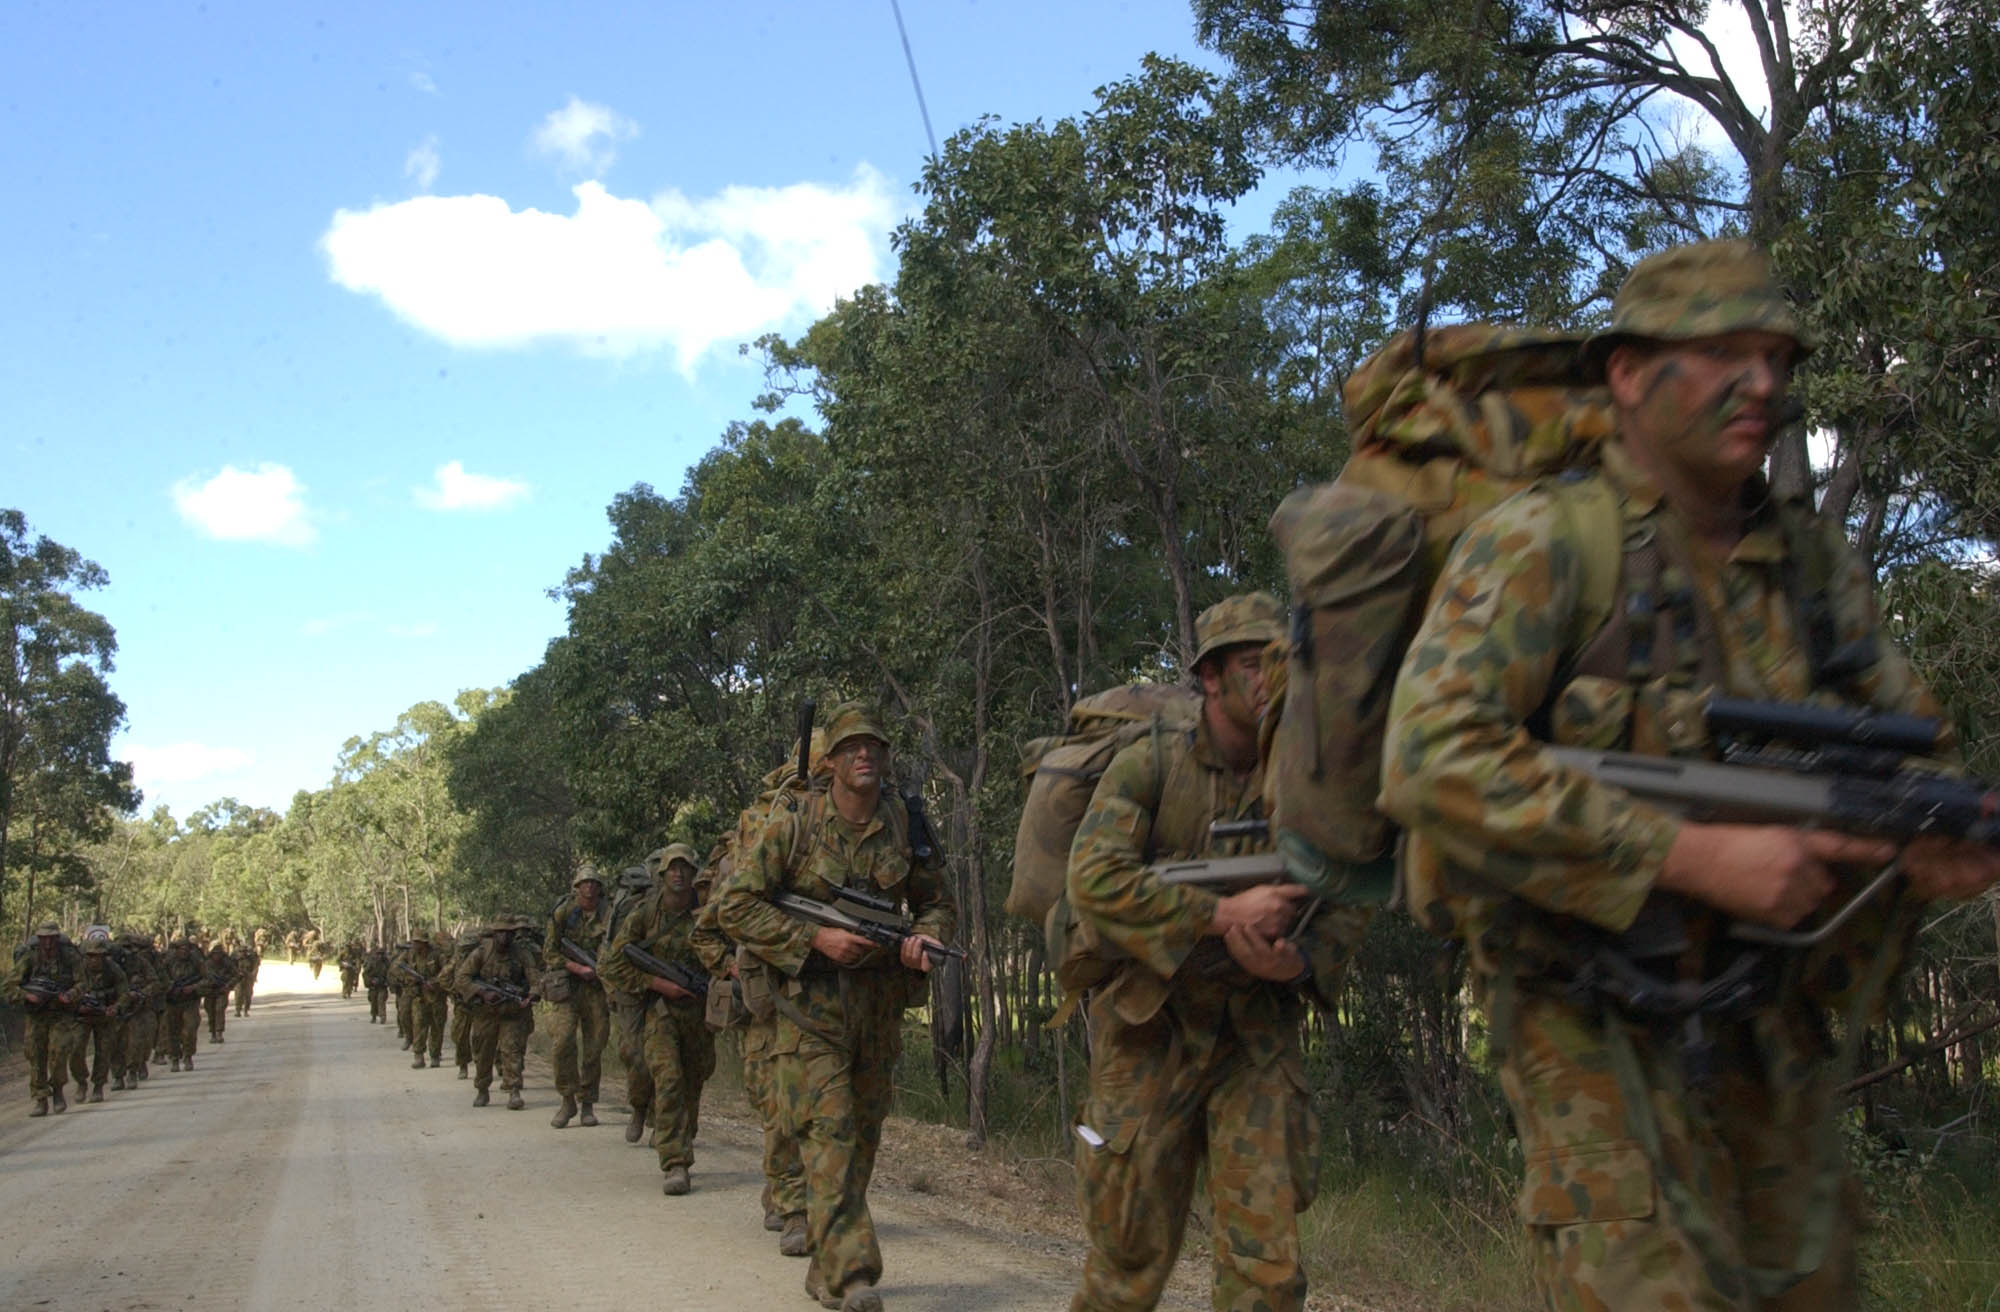 Australia to increase its troops in Solomon Islands